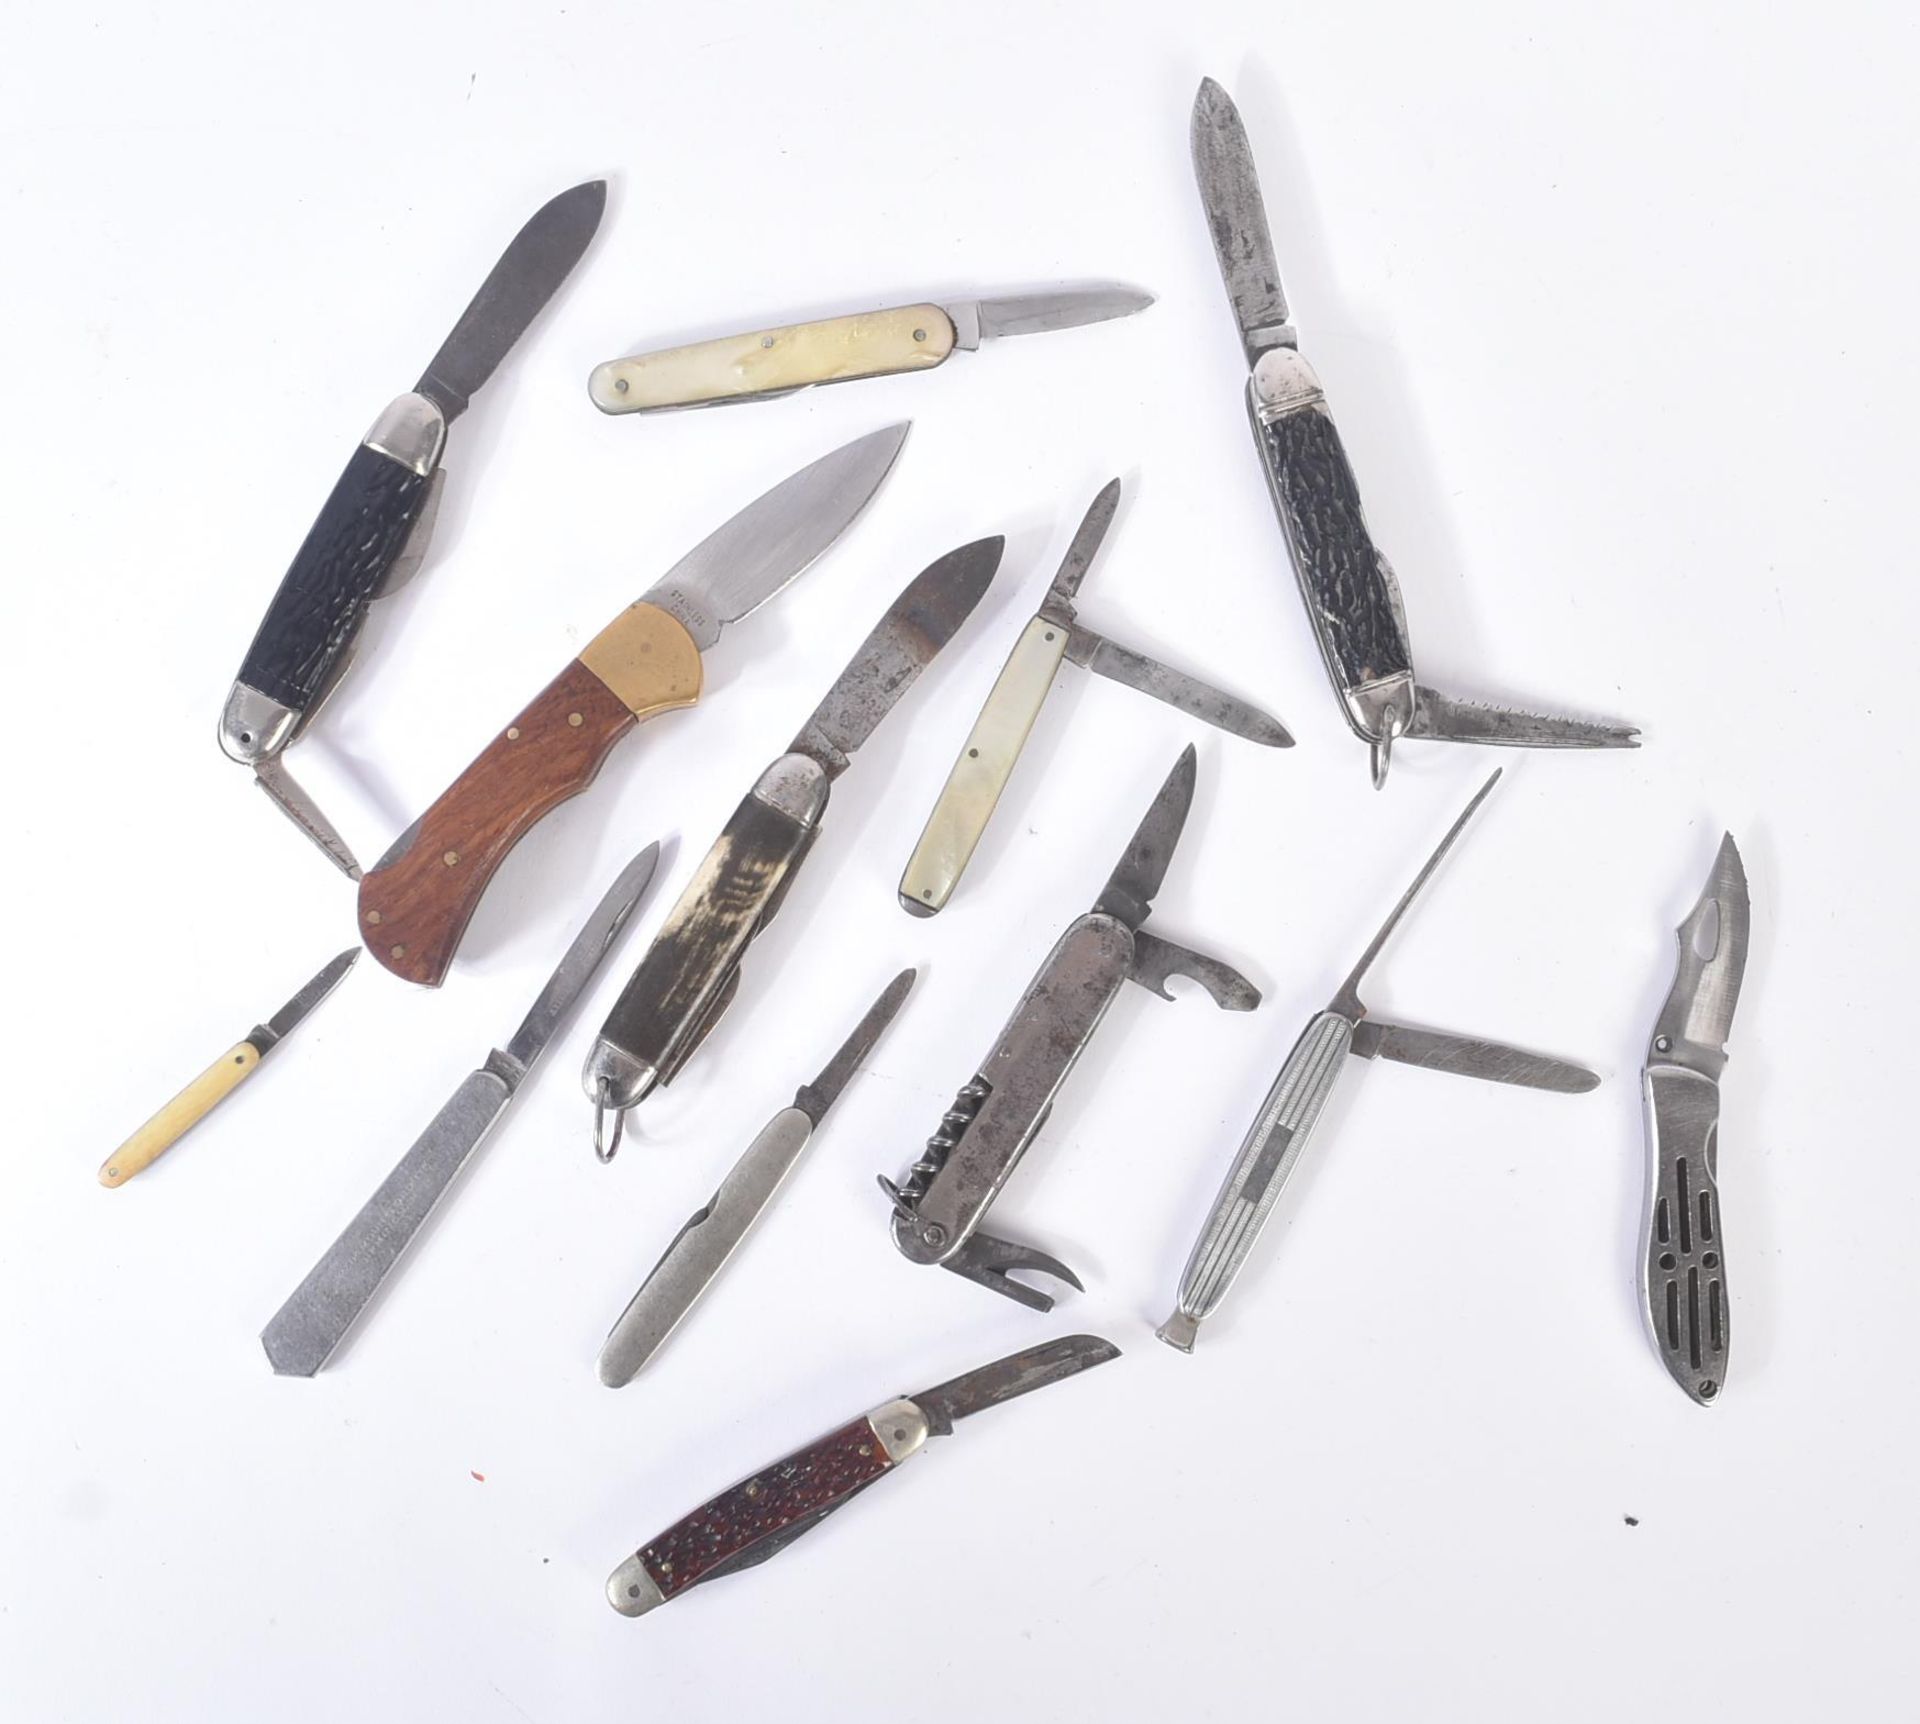 KNIVES - COLLECTION OF ASSORTED VINTAGE POCKET KNIVES